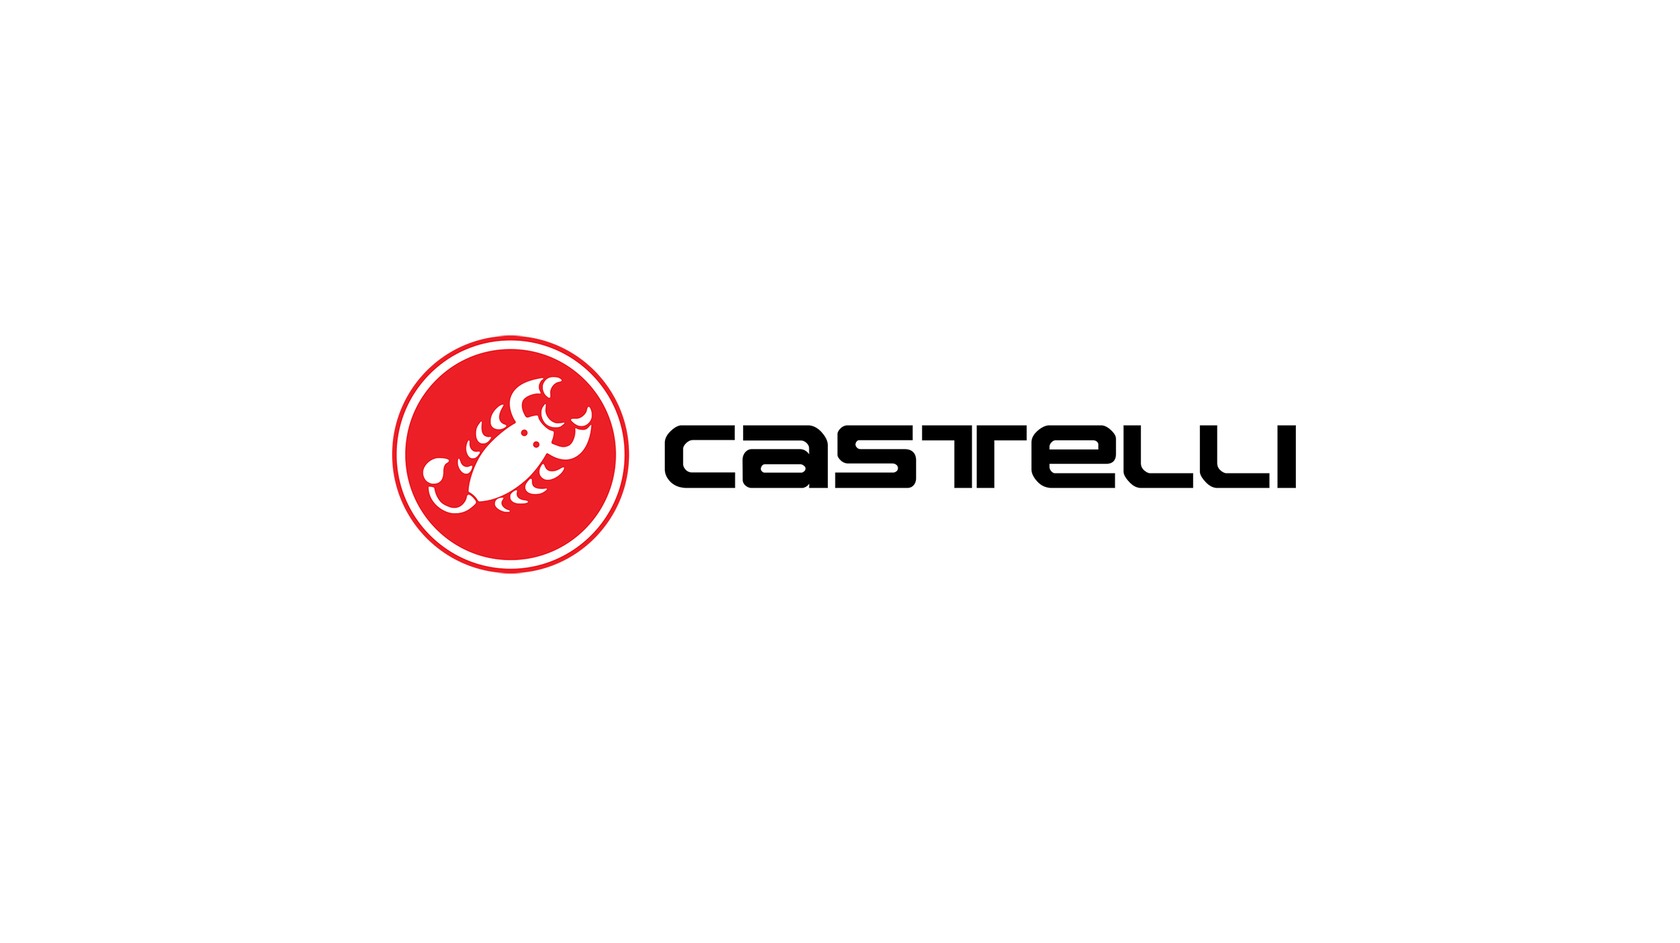 Surplace Sports - Castelli - Logo